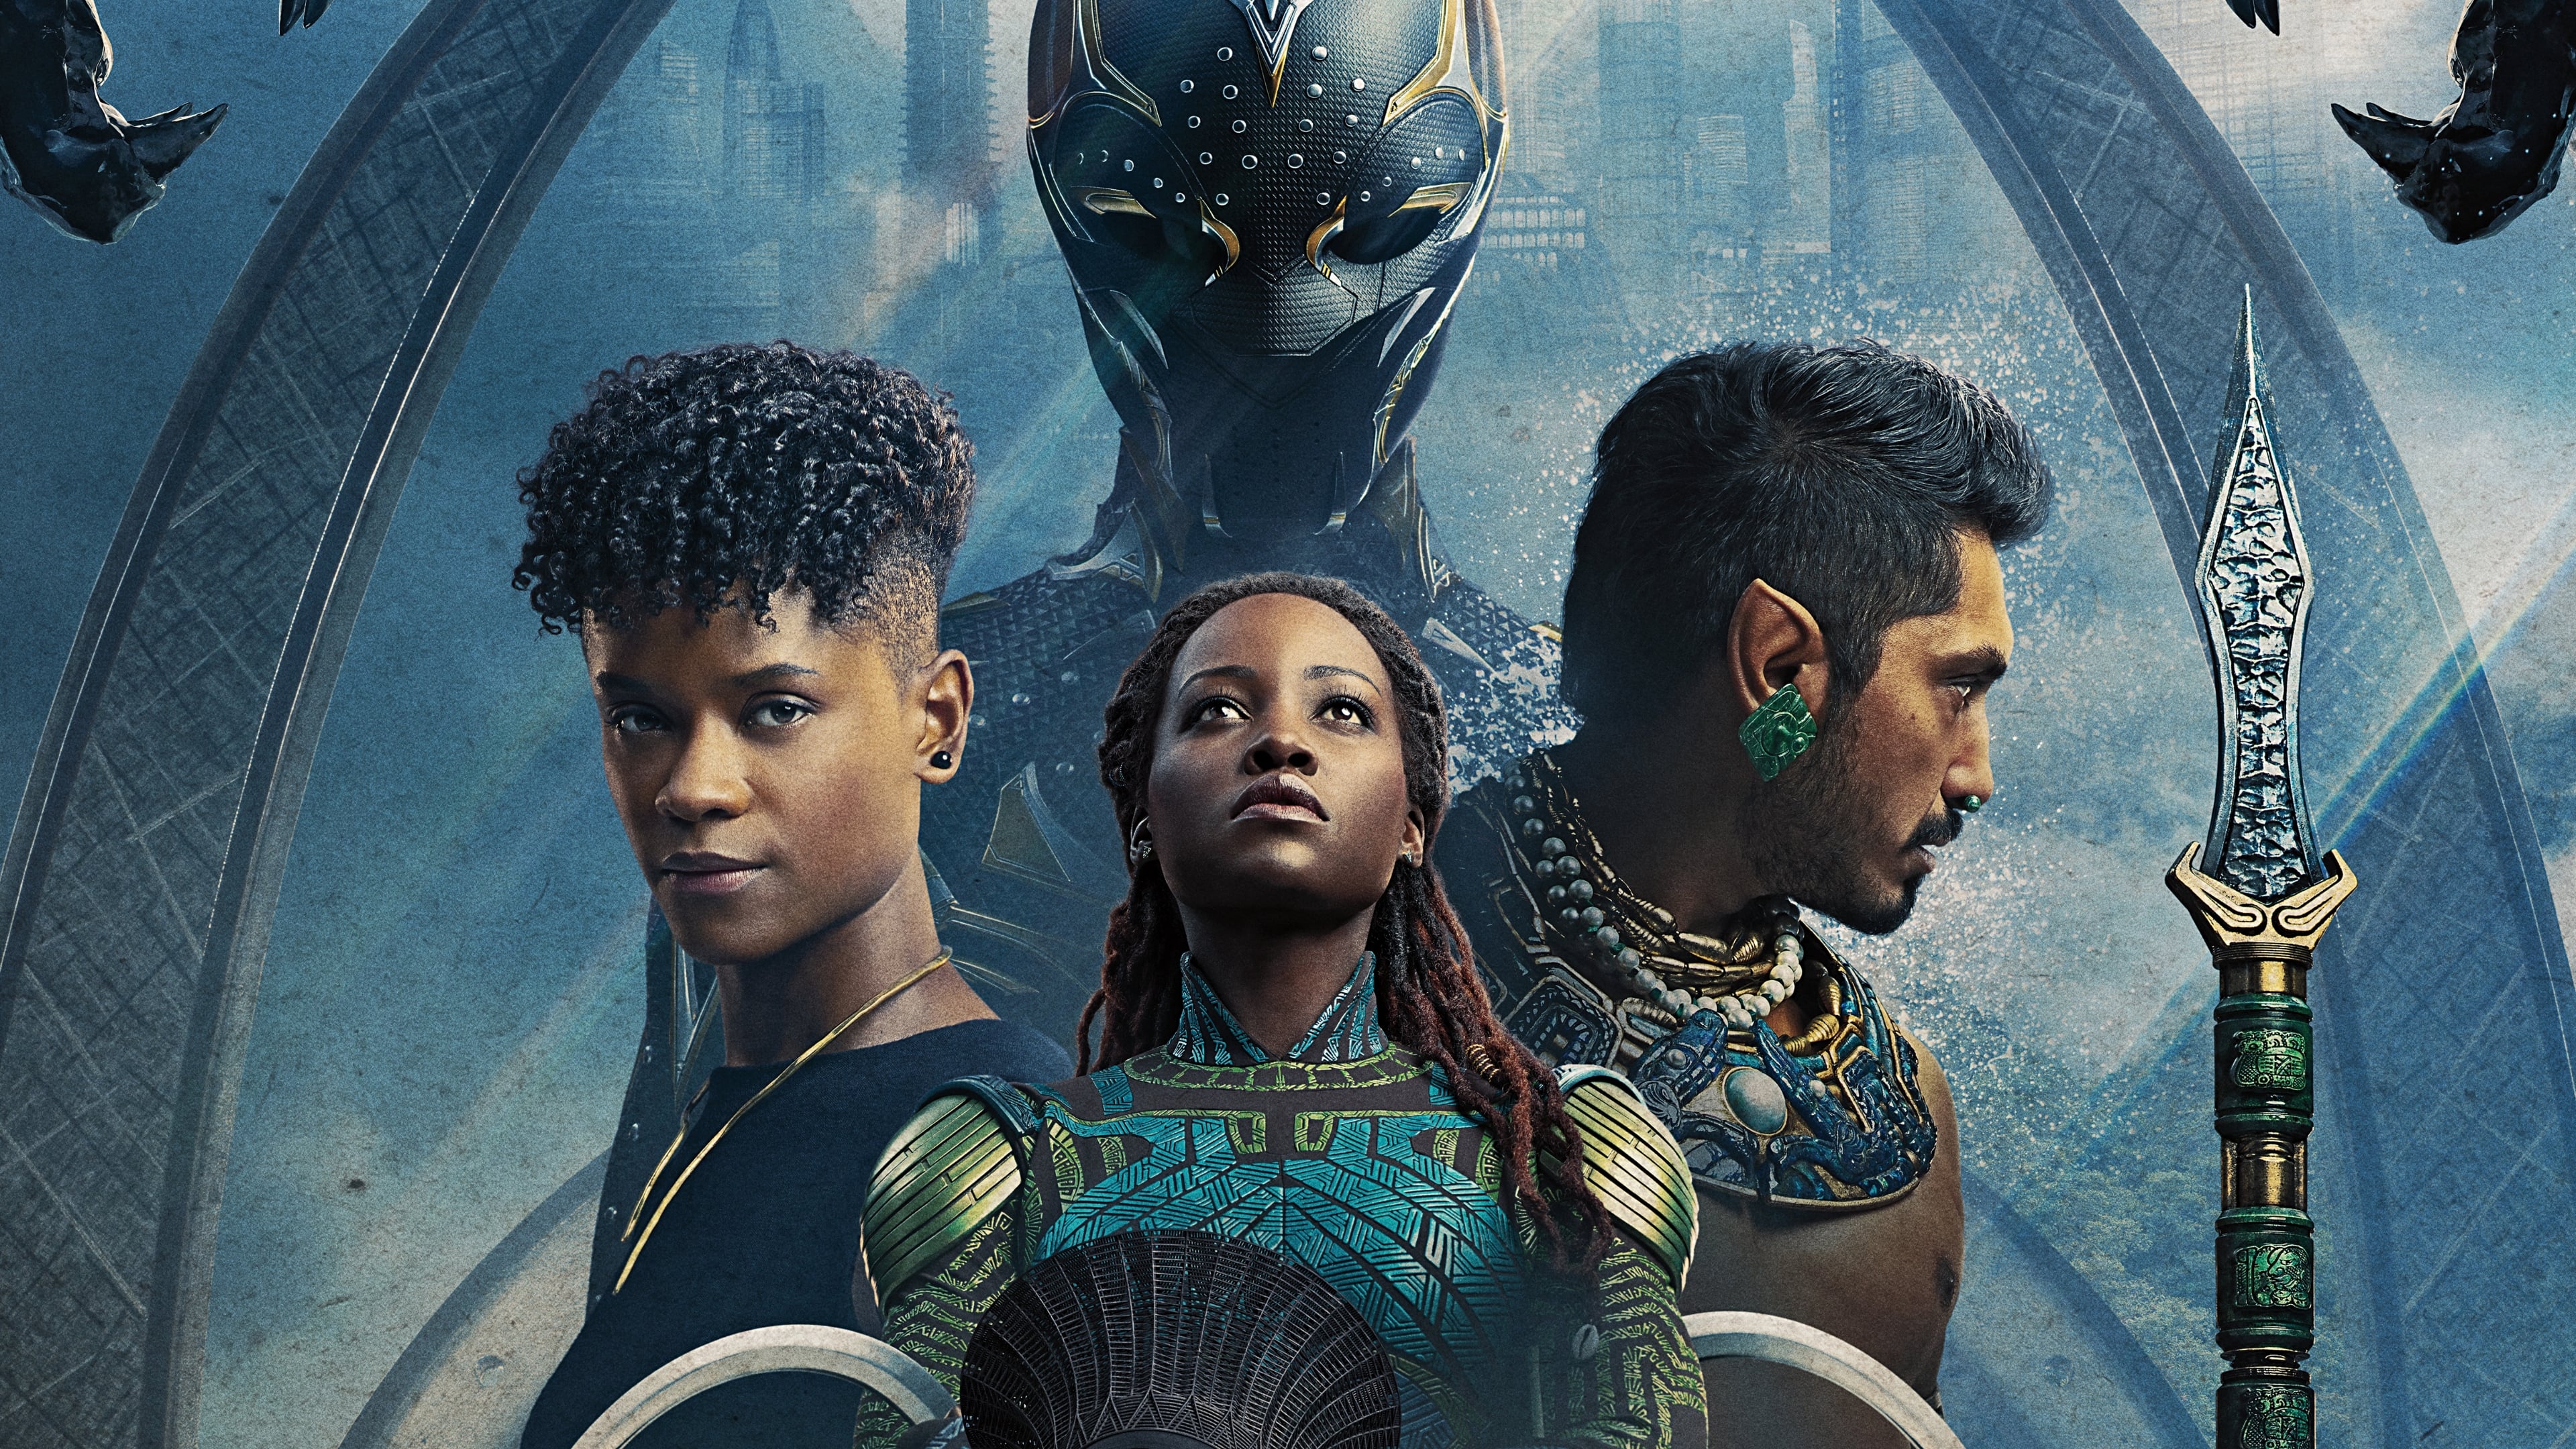 Black Panther: Wakanda Forever 4k Ultra HD Wallpaper